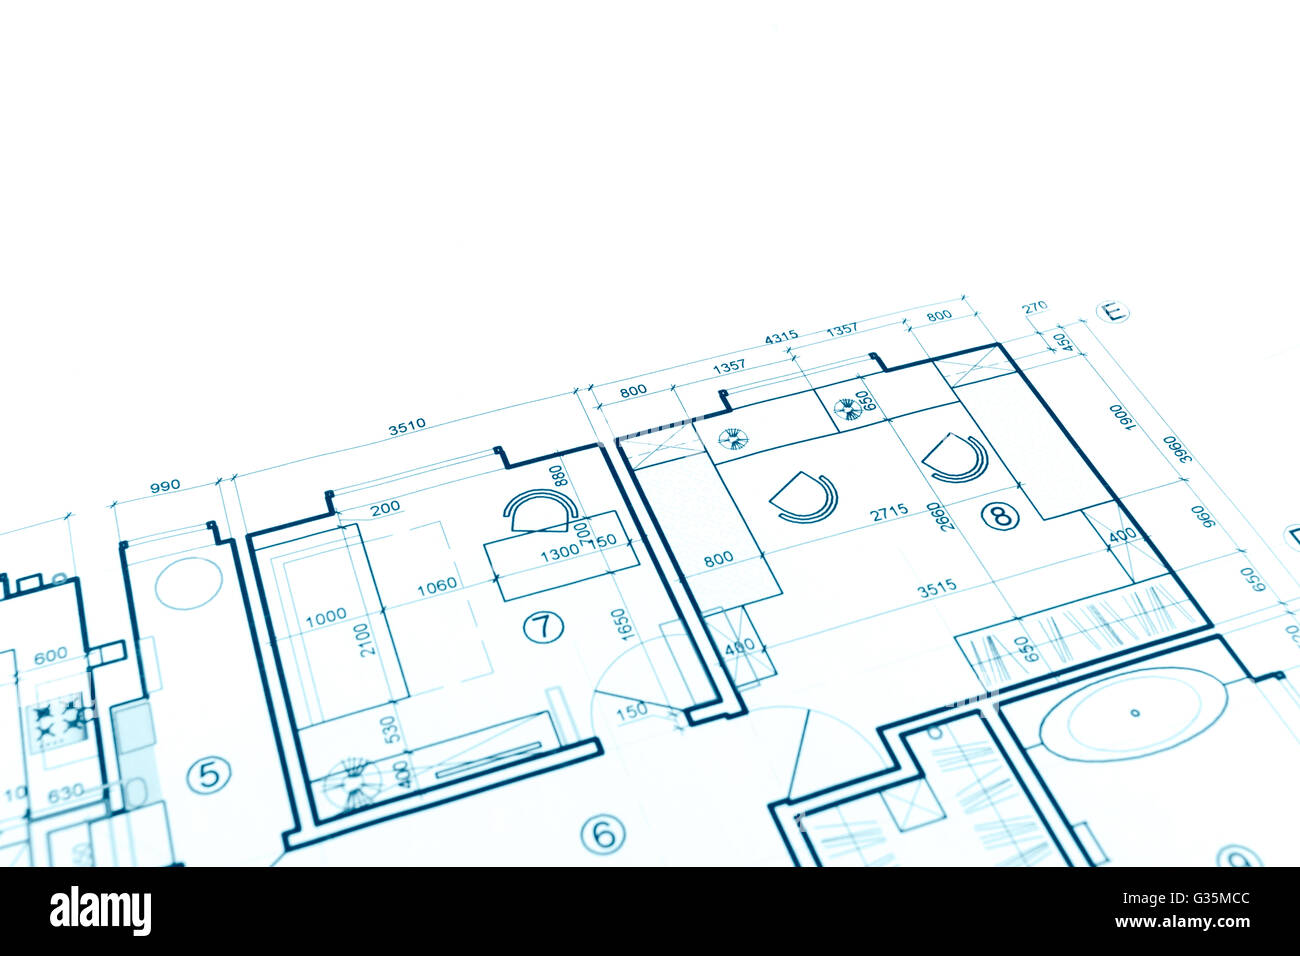 floor plan blueprint, blueprints background, architecture